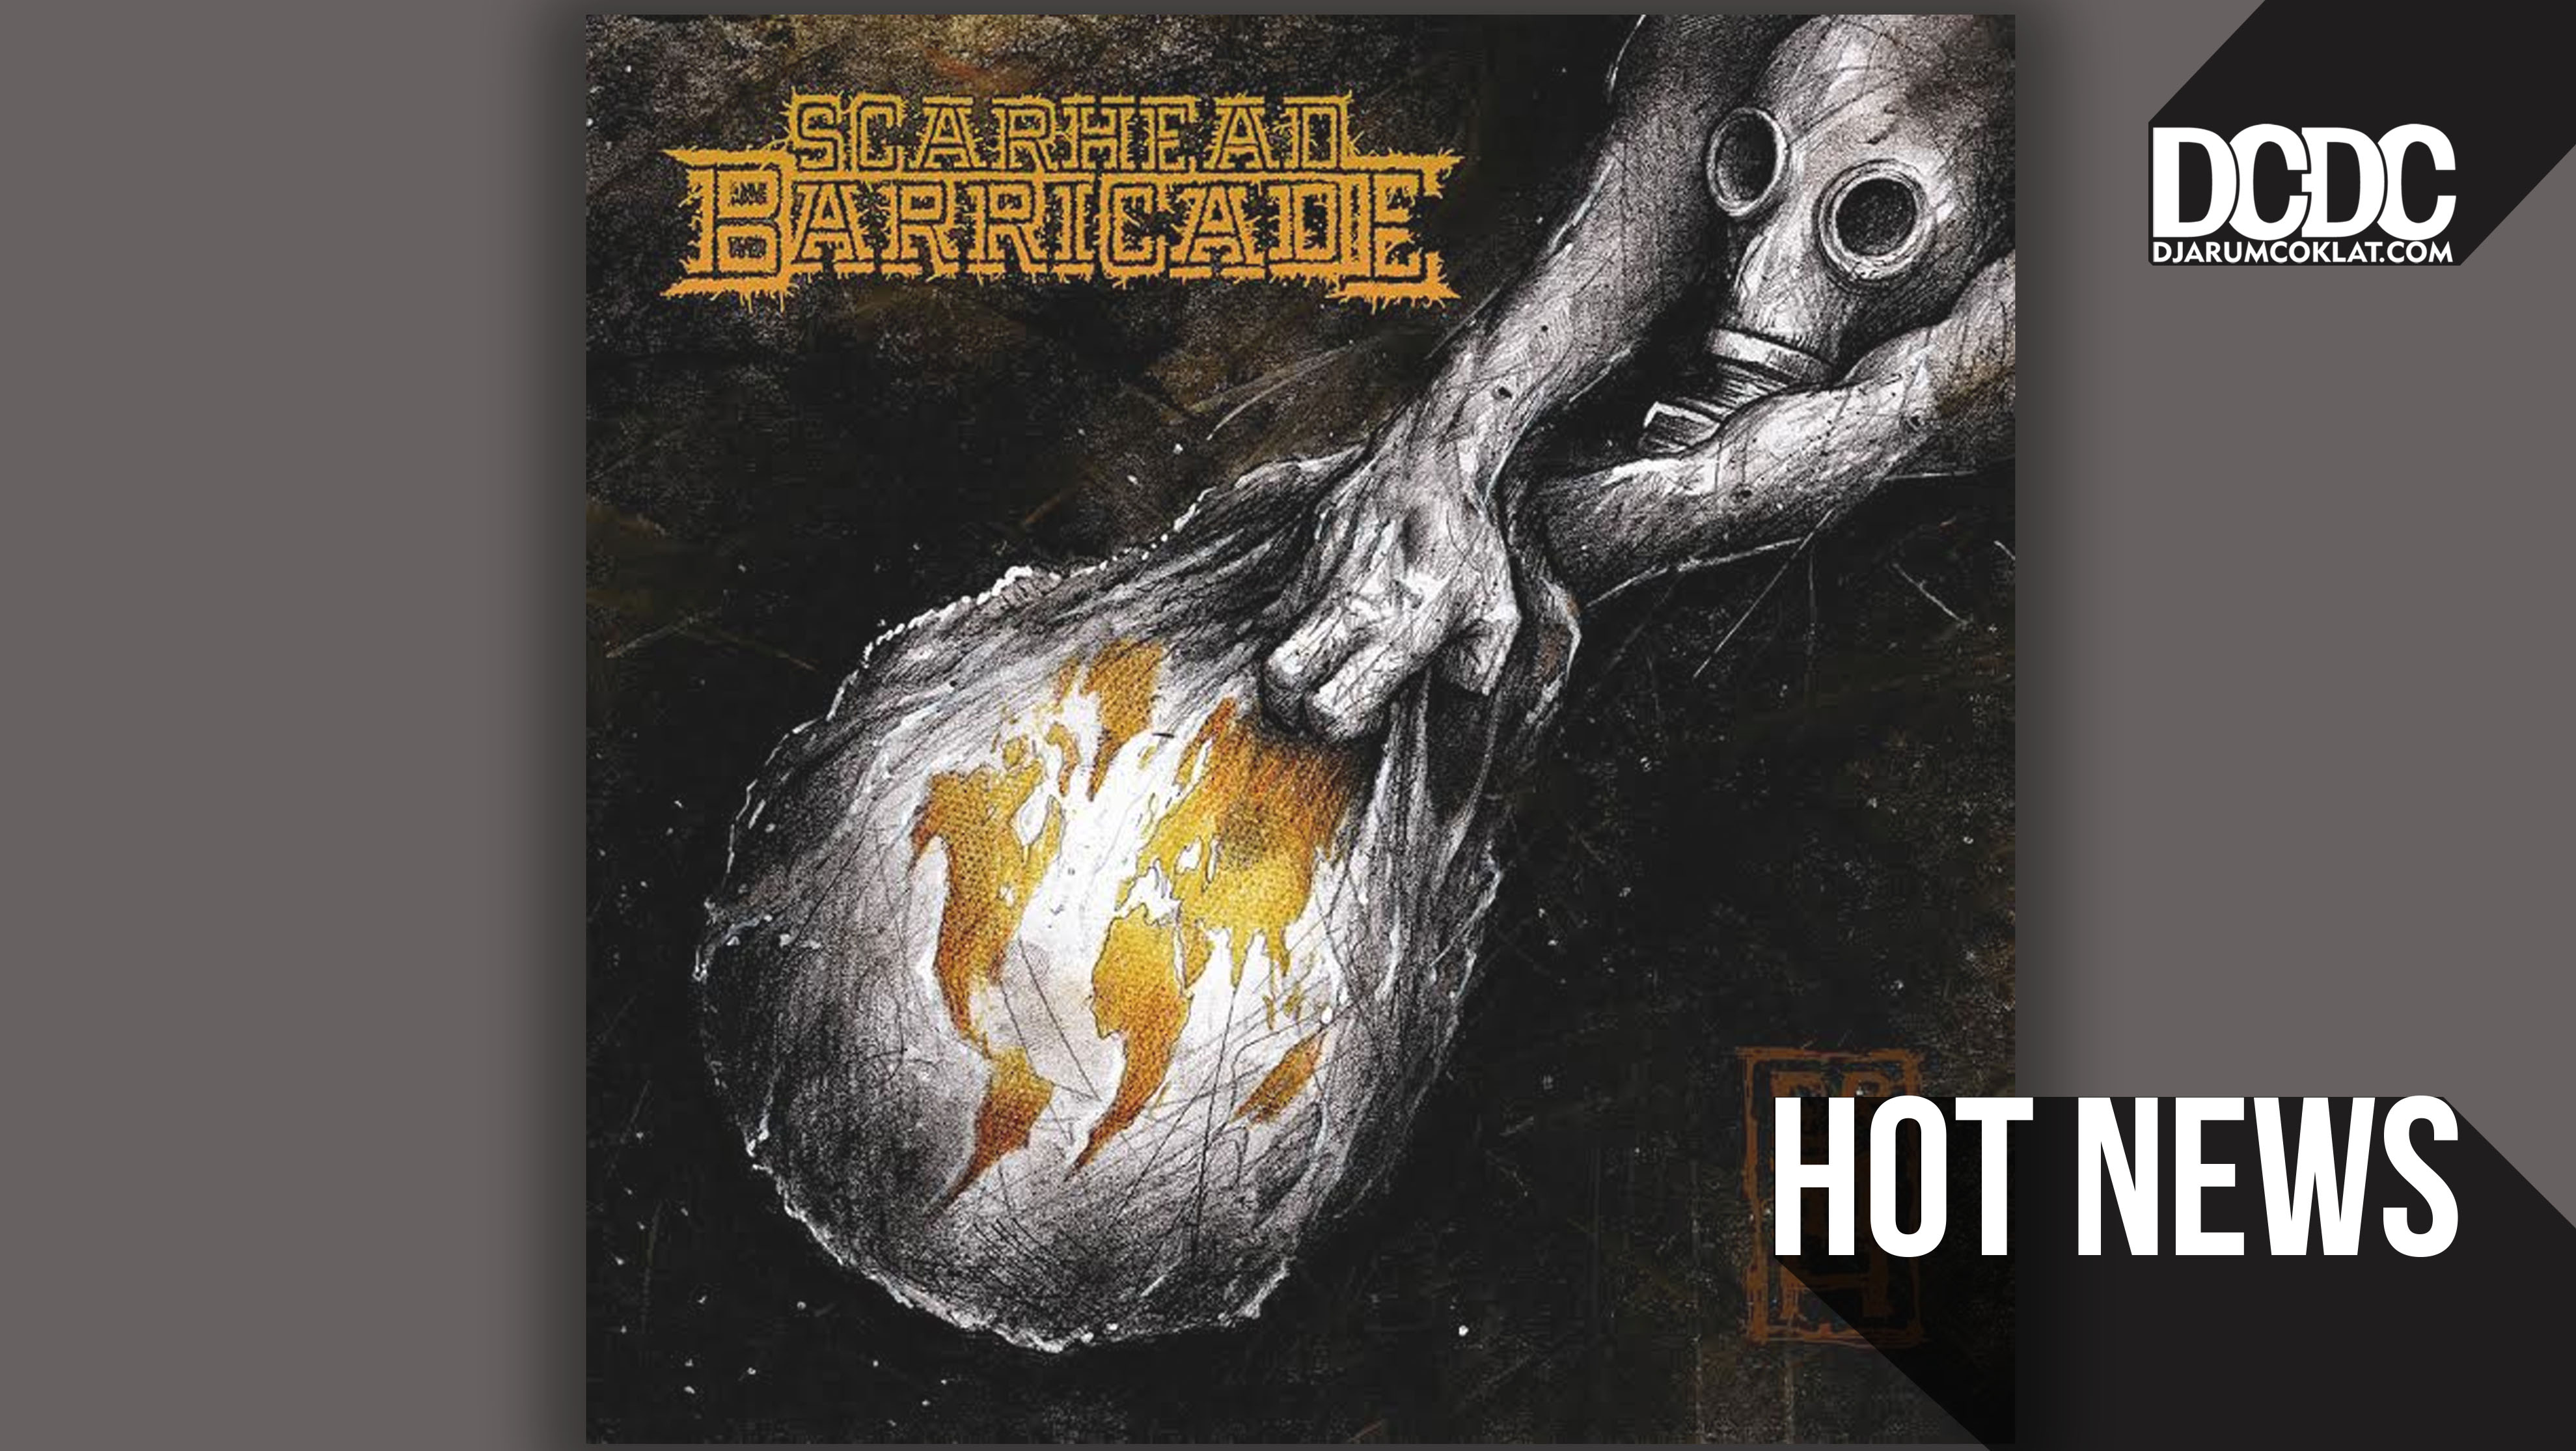 Band Grindcore Asal Palu Scarhead Barricade Rilis Album “Berbahaya”